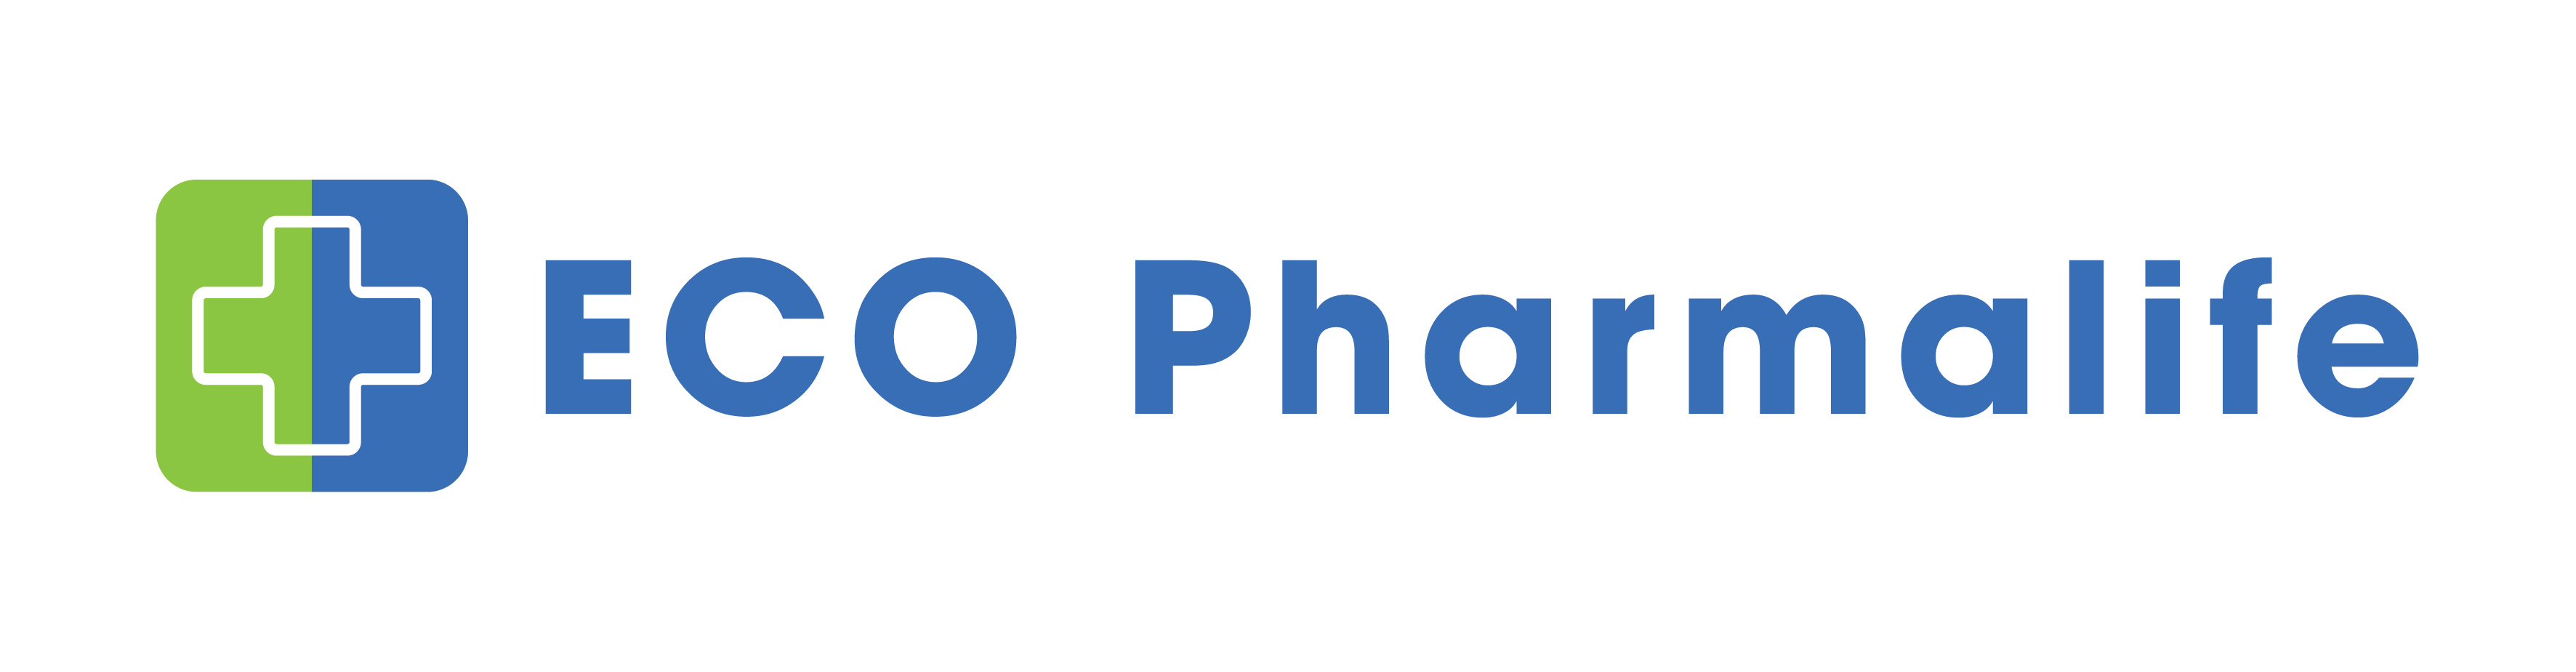 eco_pharmalife_logo_vien